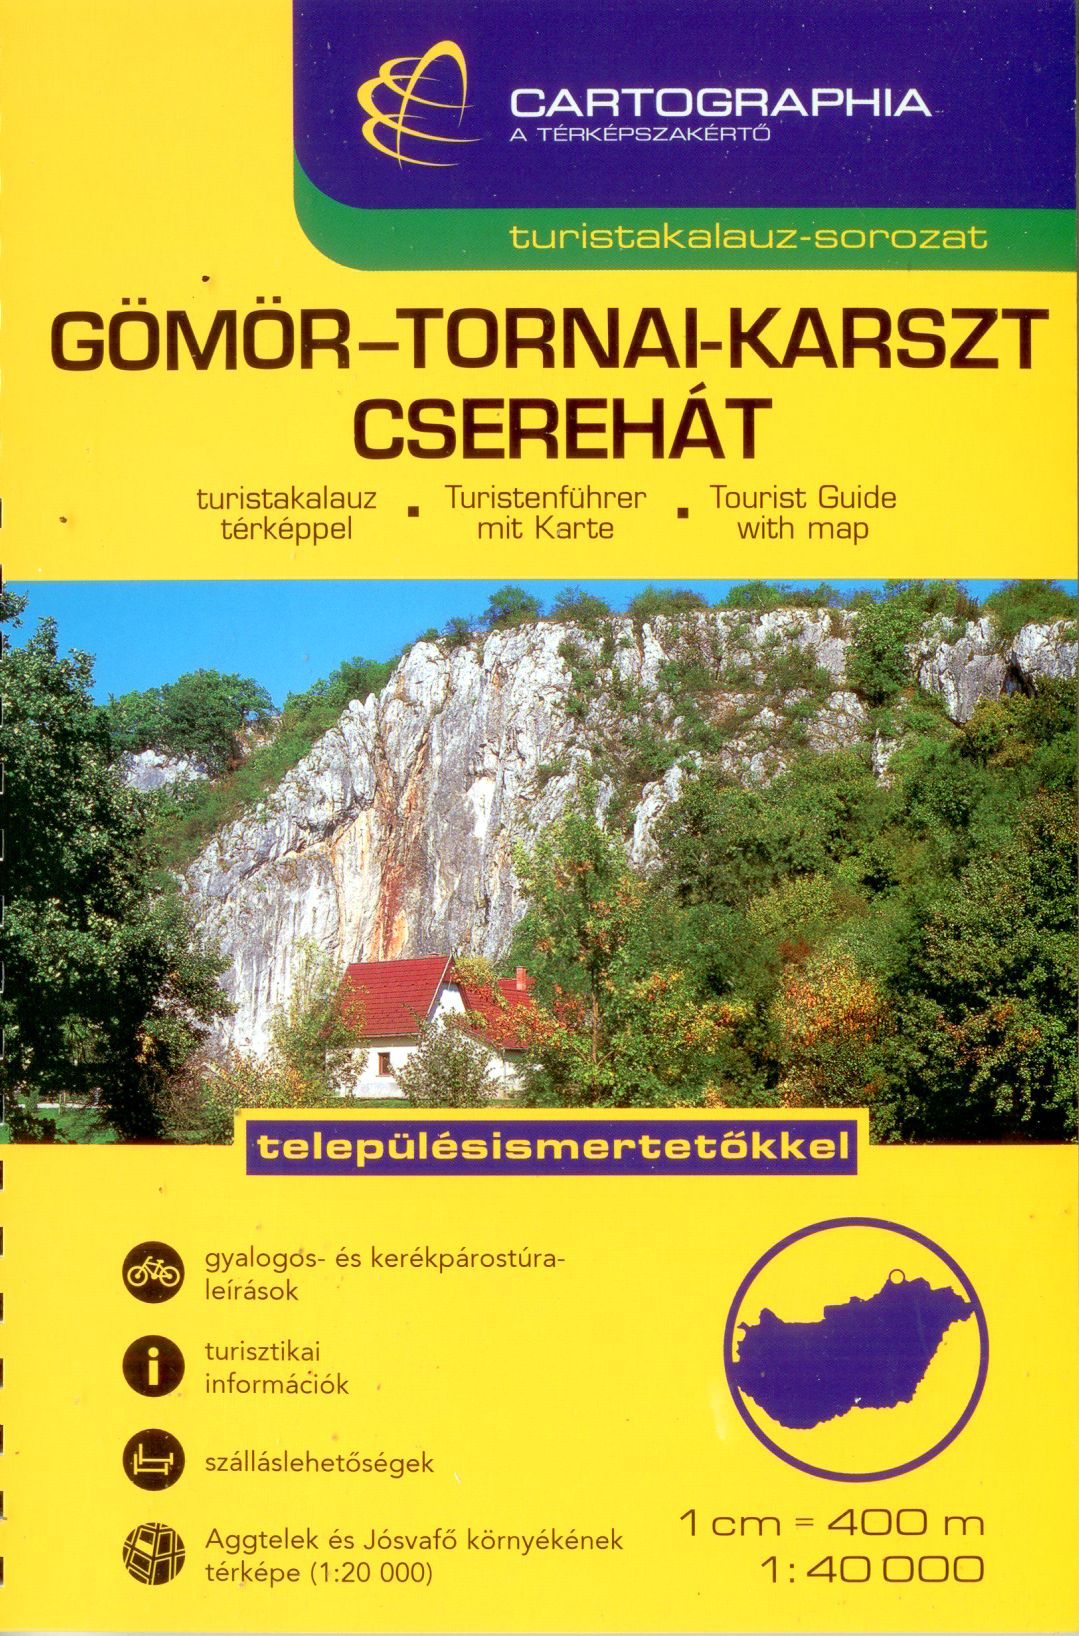 Aggtelek, Gömör and Cserehát region (1:60.000). Detailed tourist info in Hungarian